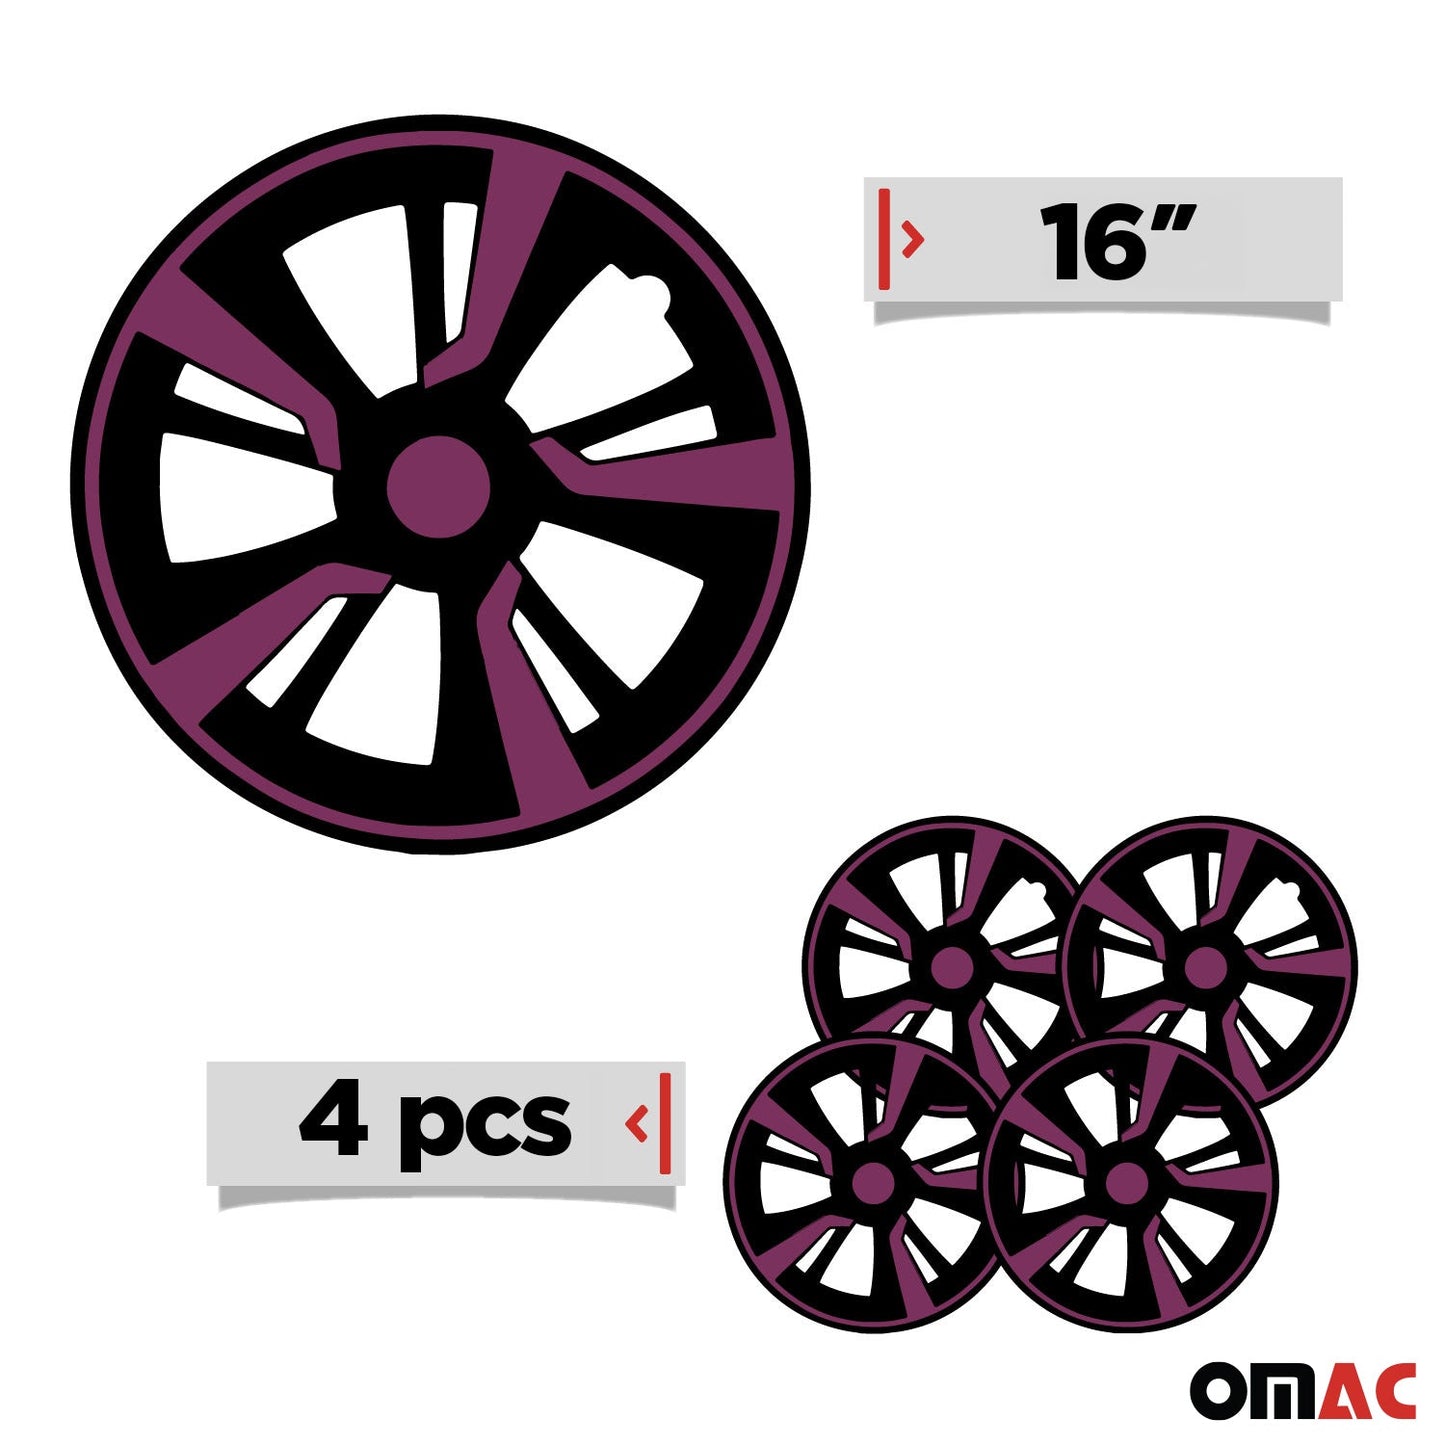 OMAC 16" Hubcaps Wheel Rim Cover Black with Violet Insert 4pcs Set VRT99FR243B16V